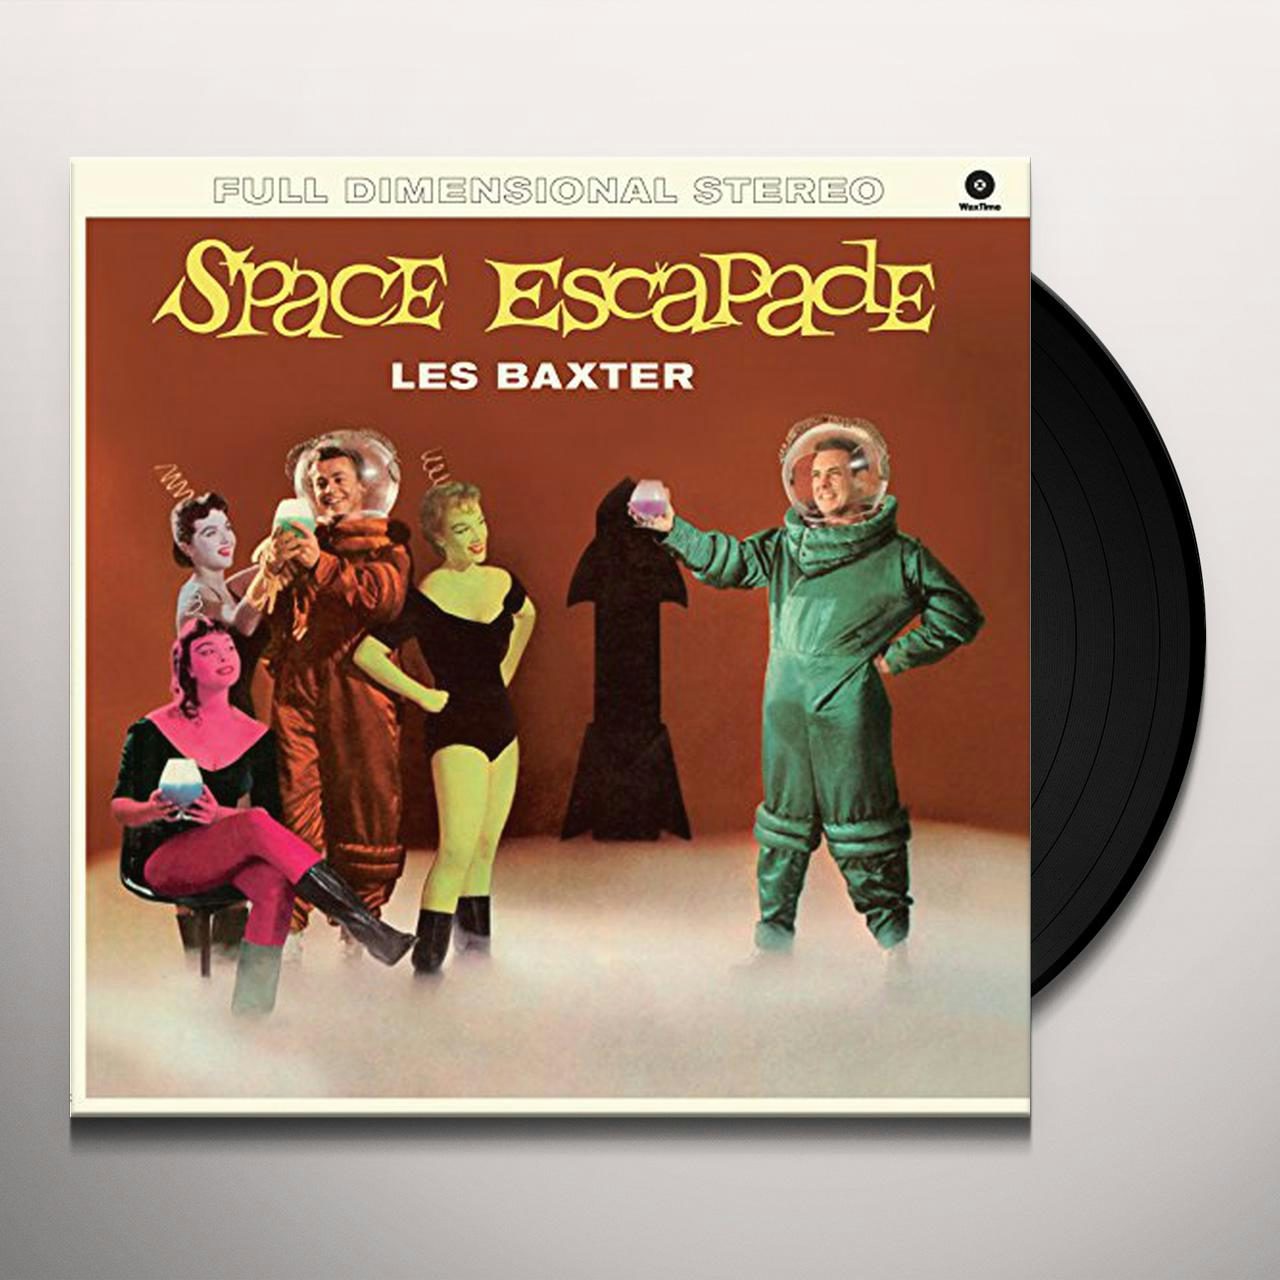 Space Escapade Vinyl Record - Les Baxter